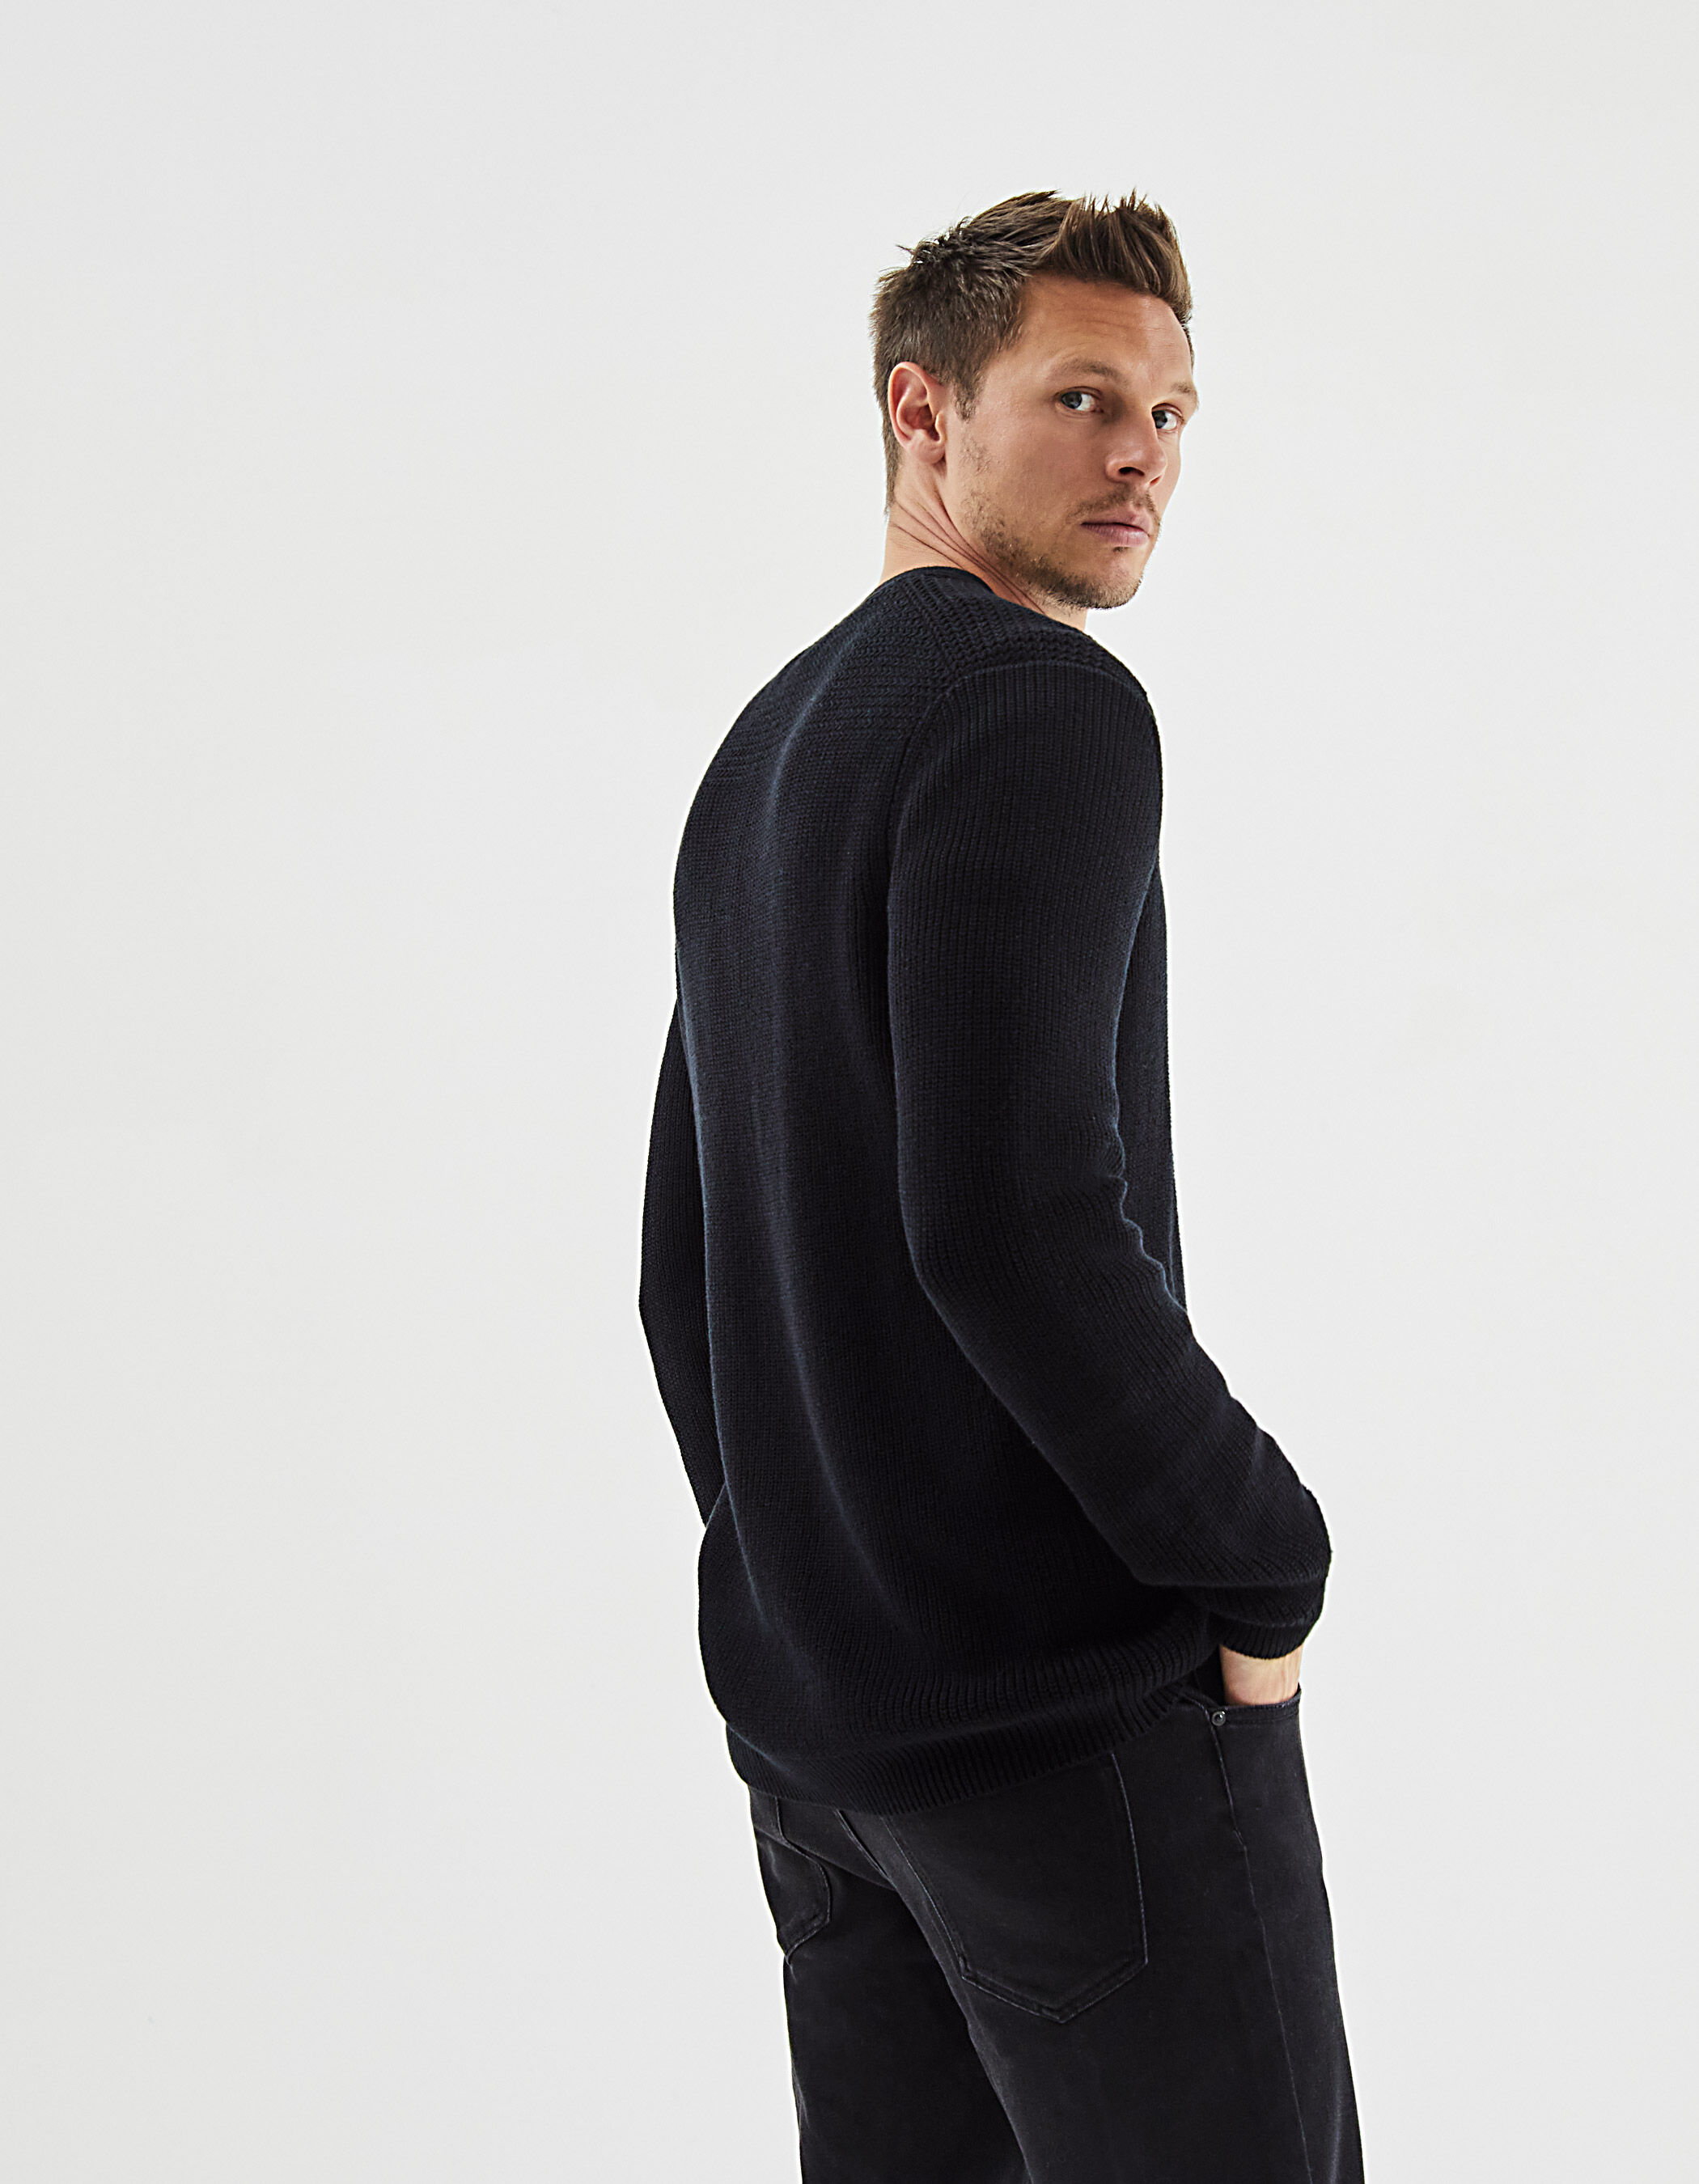 Men's black knit V-neck sweater